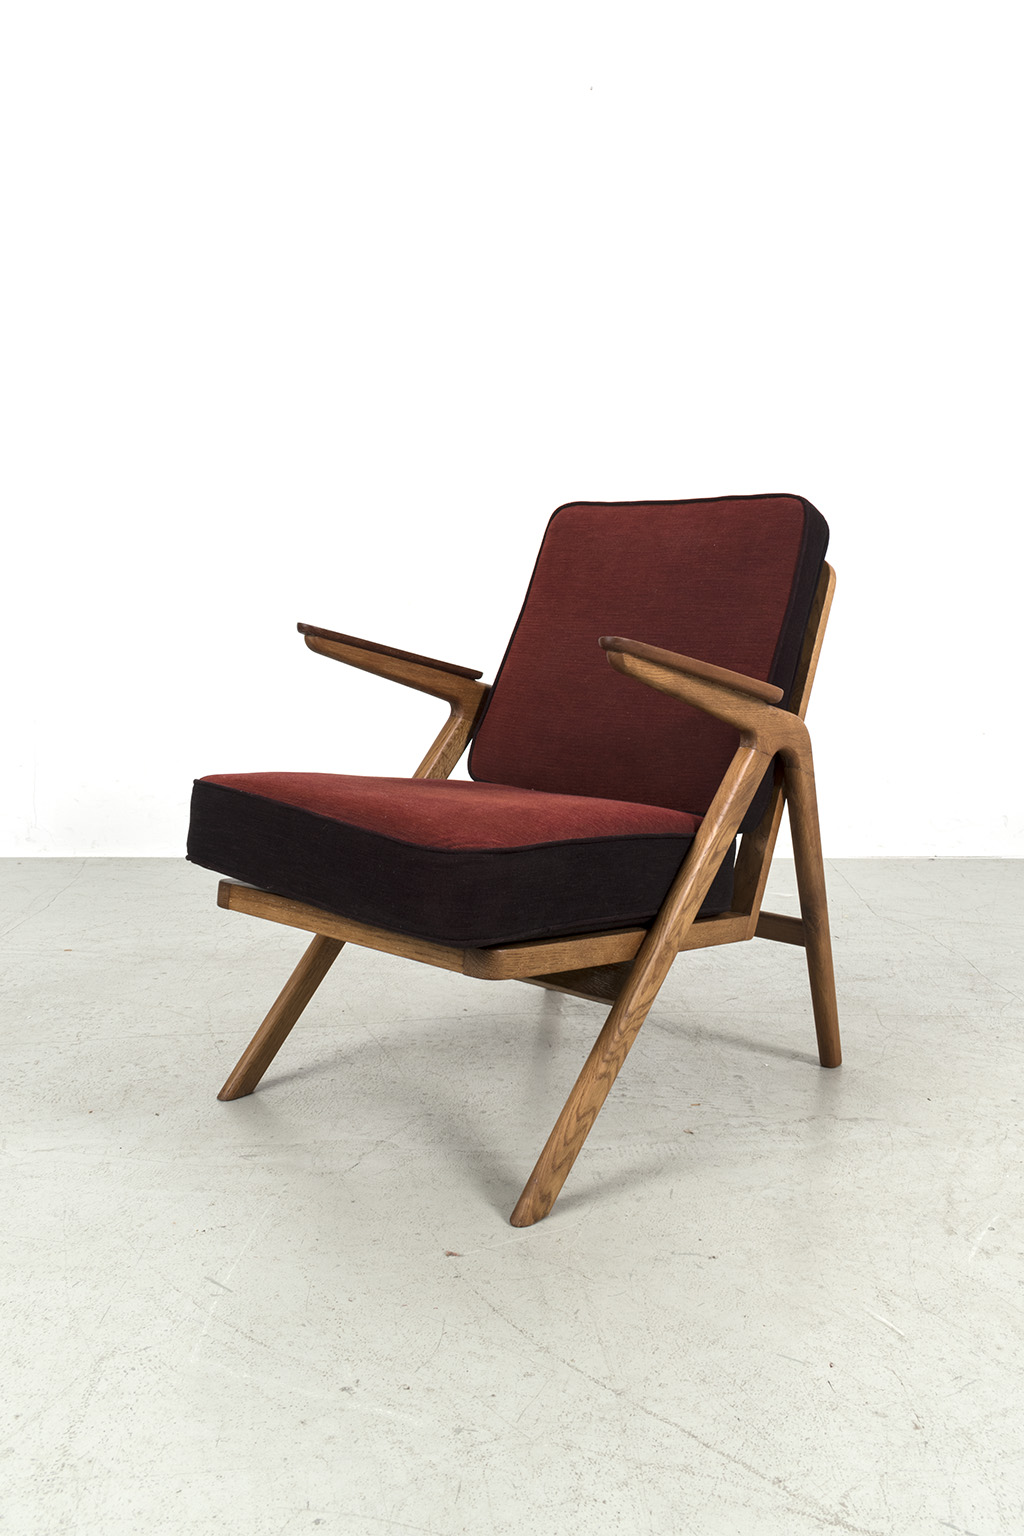 Fabriek stromen lekkage Vintage jaren '50 fauteuil - Decennia Design